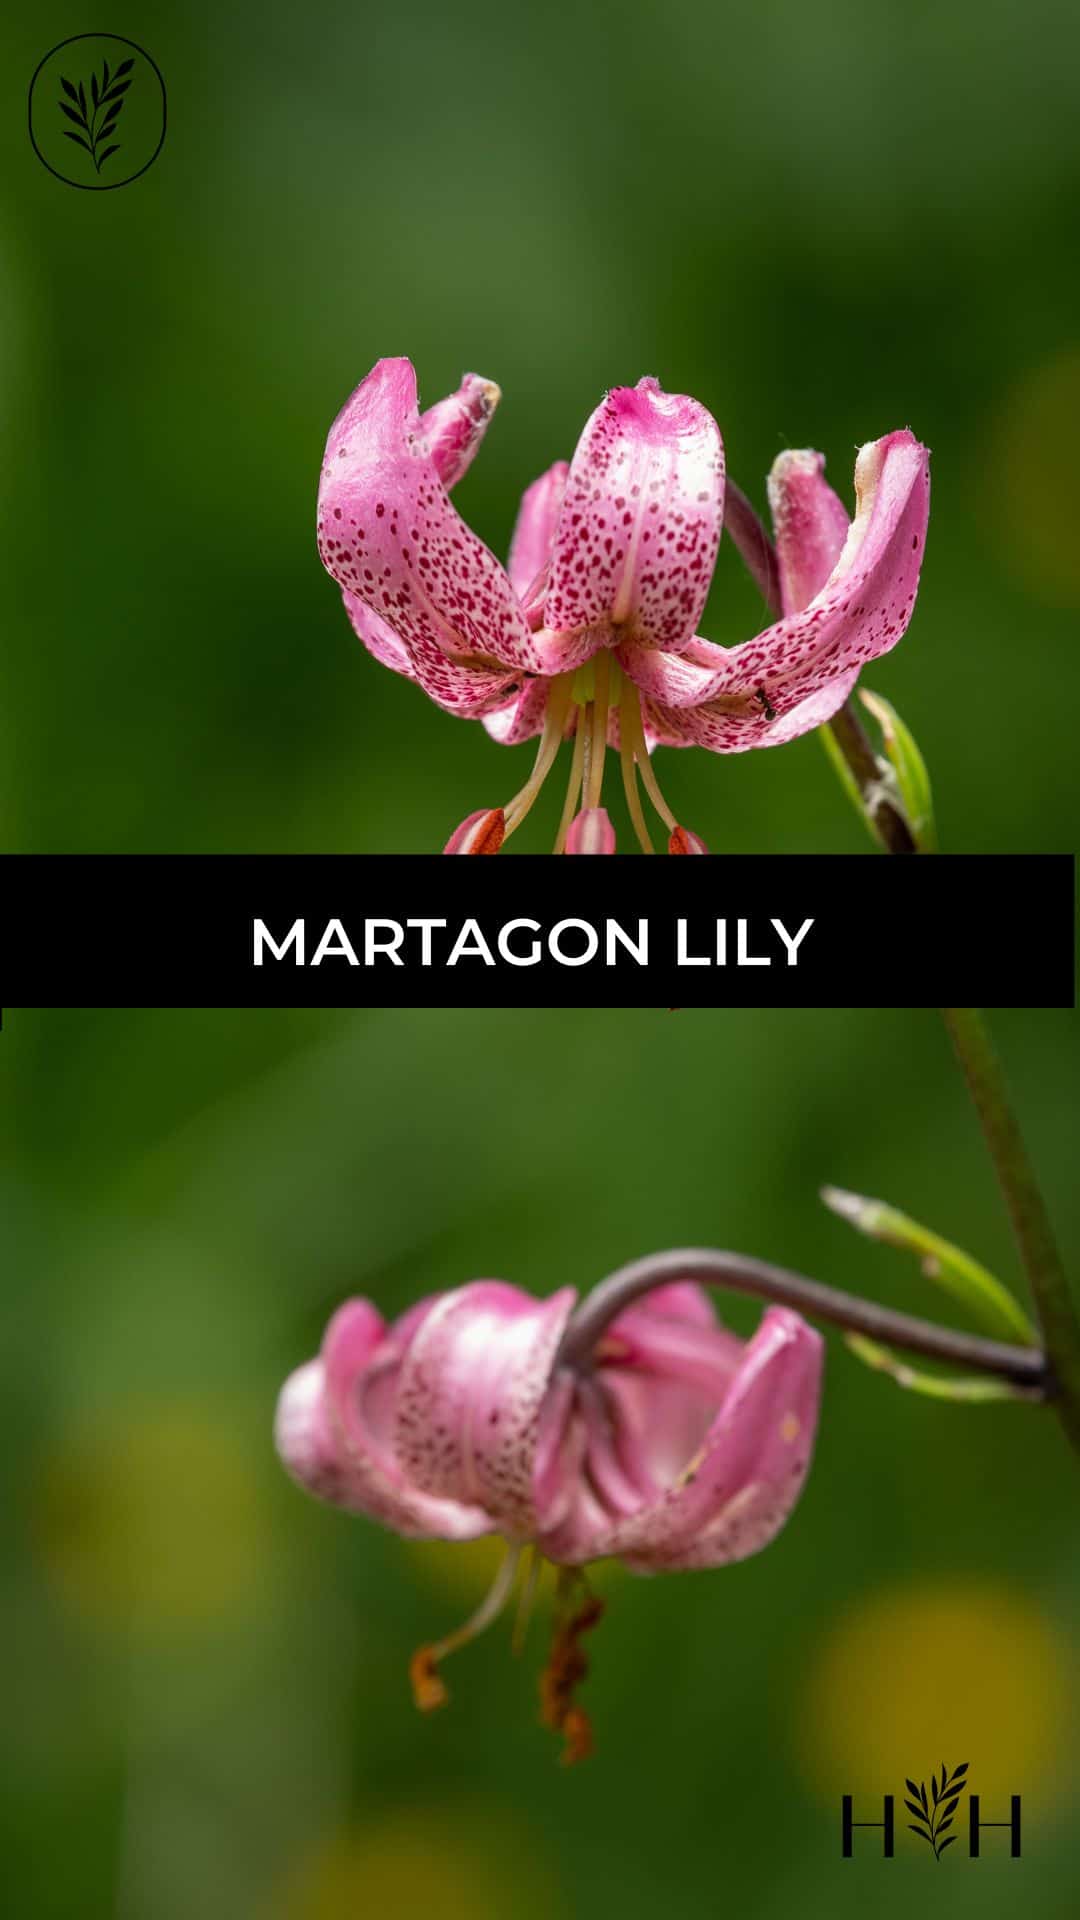 Martagon lily via @home4theharvest